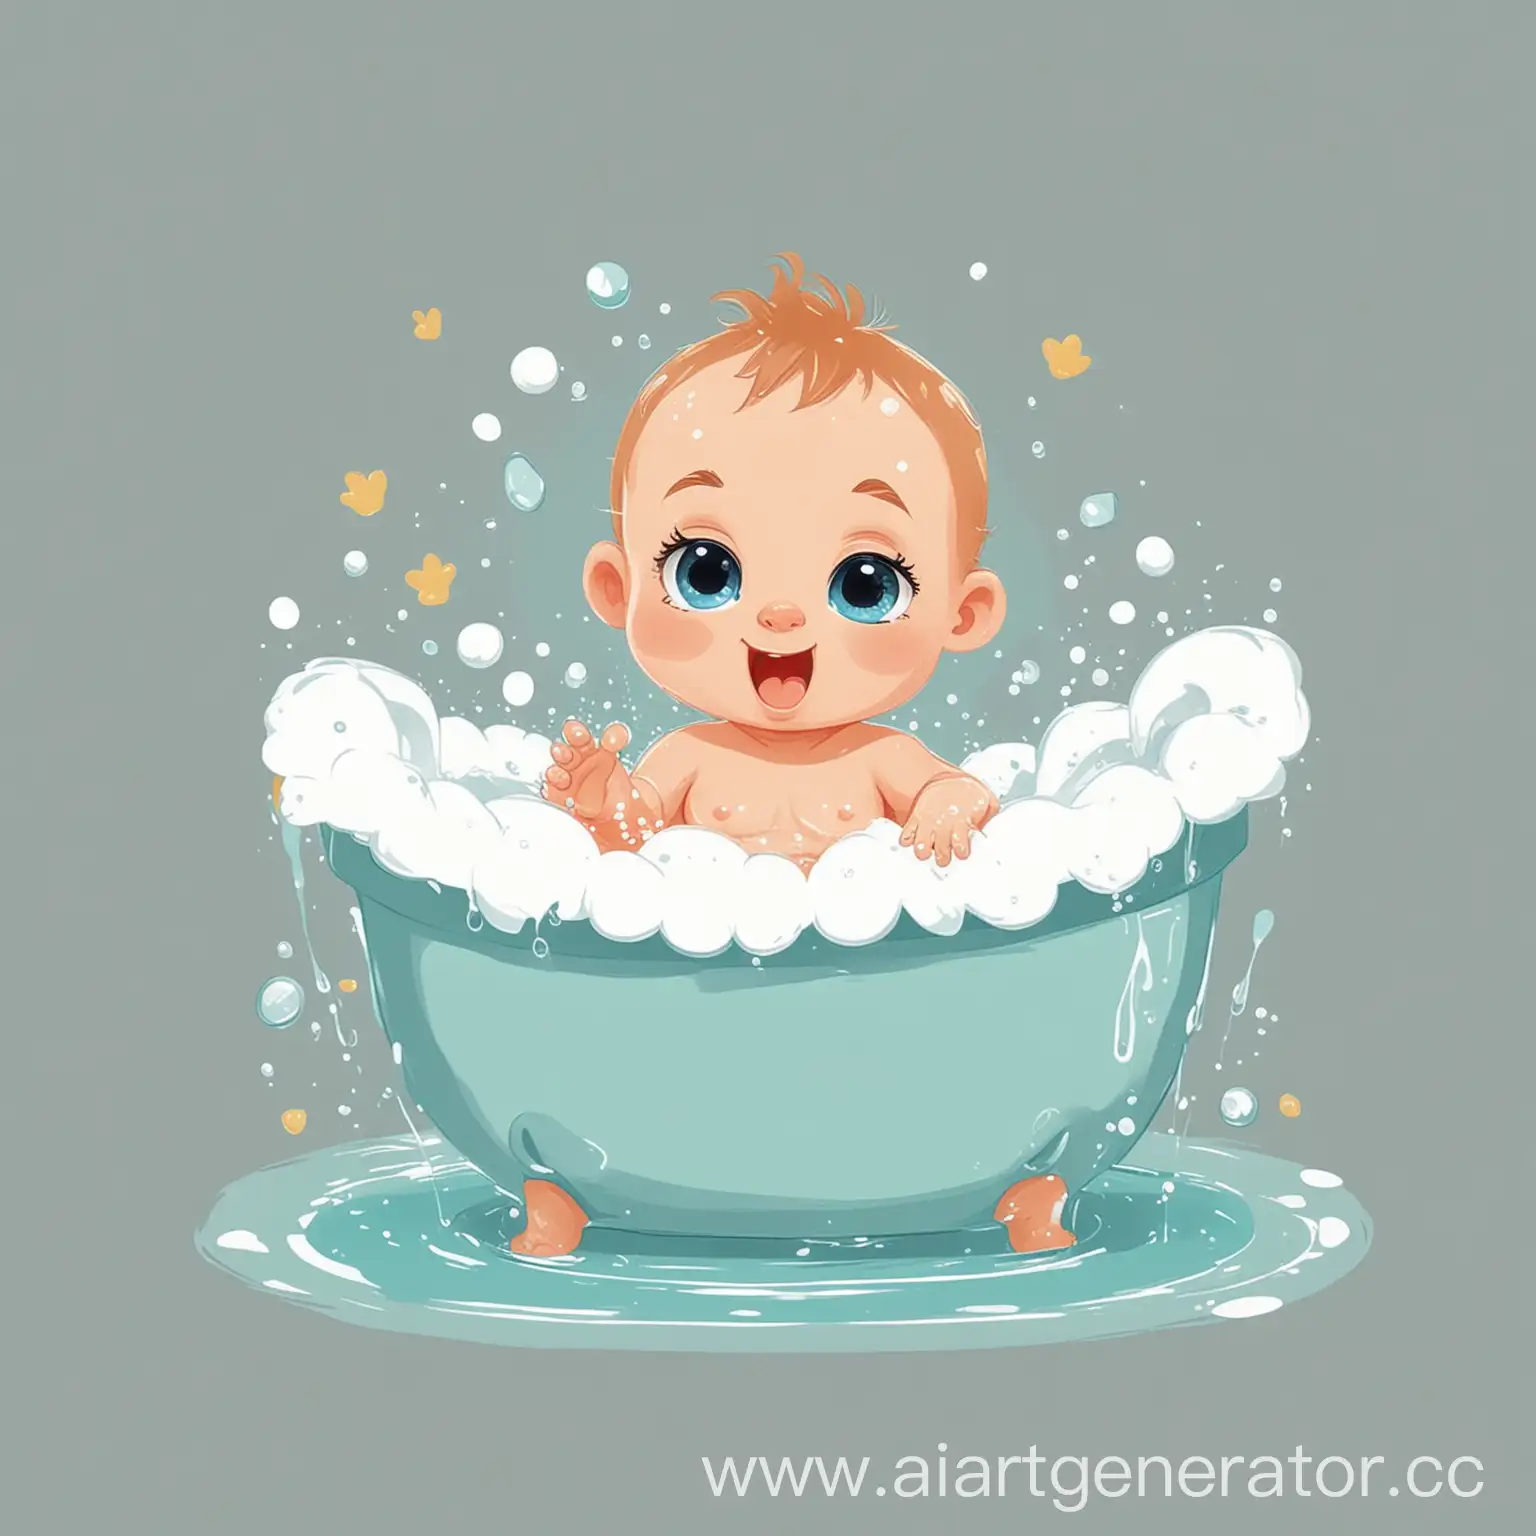 Cherubic-Infant-Enjoying-a-Gentle-Bath-Serene-2D-Illustration